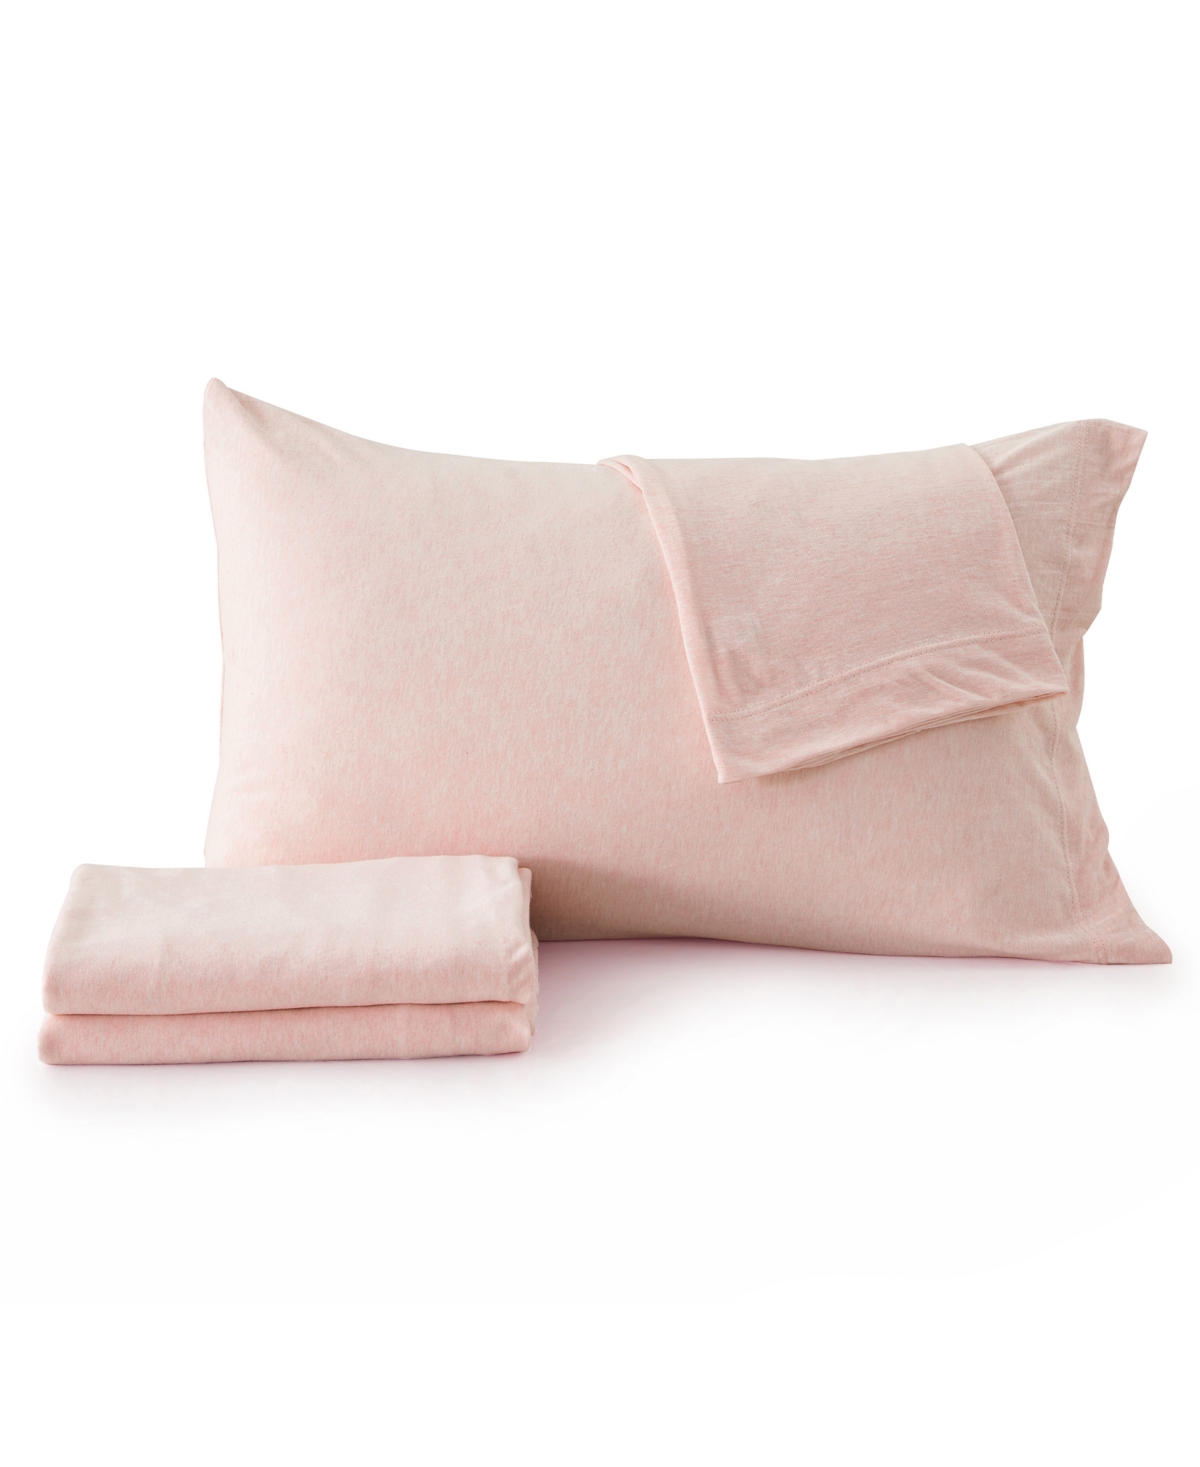 Premium Comforts Heathered Melange T-shirt Jersey Knit Cotton Blend 4 Piece Sheet Set, Twin Xl In Blush Pink